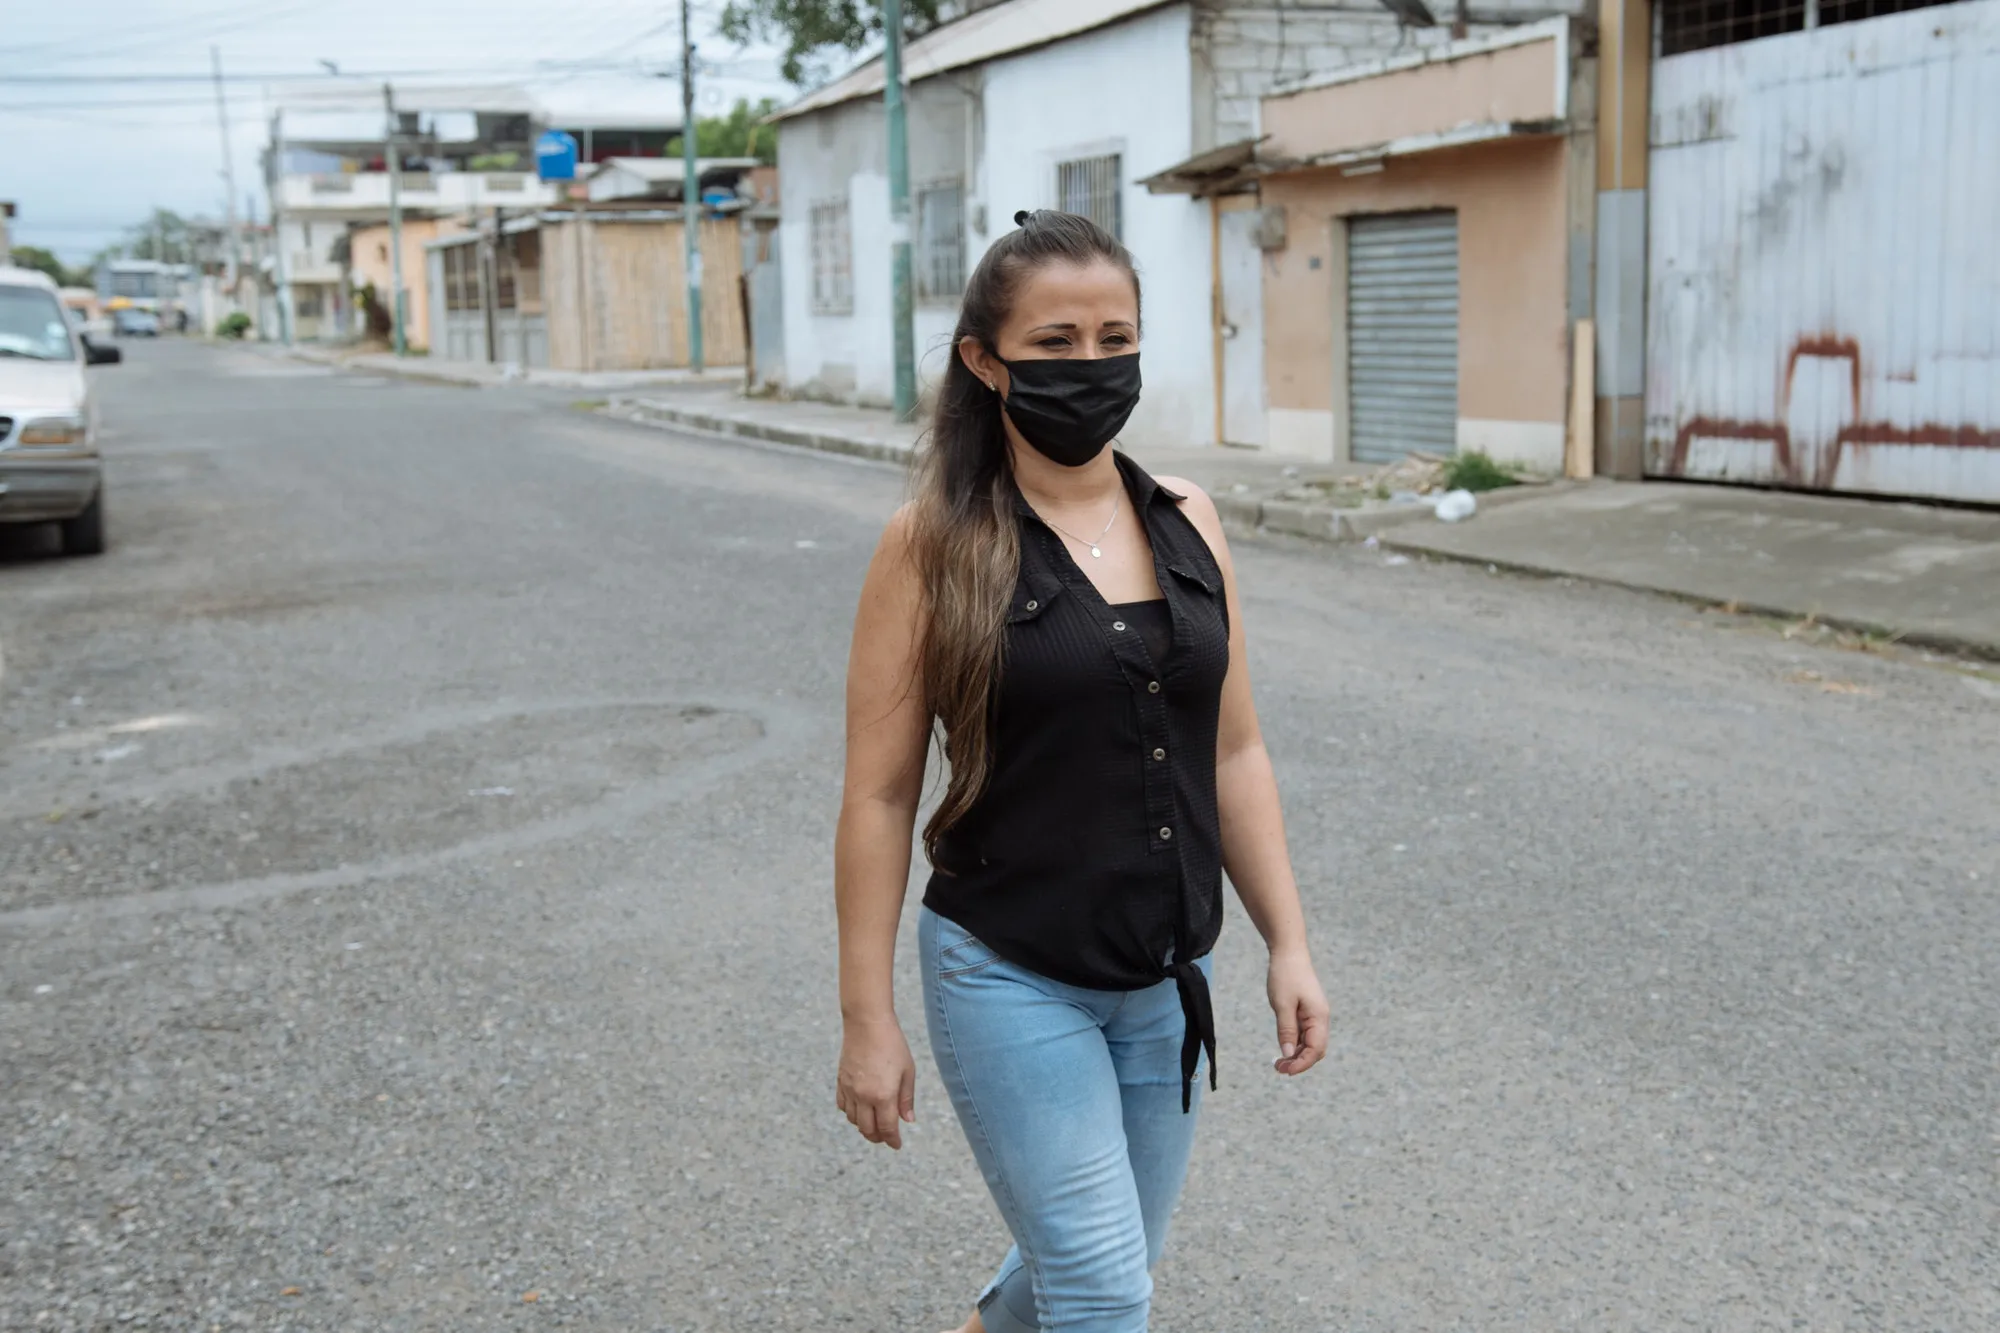 A woman in a face mask walks in an empty city street.